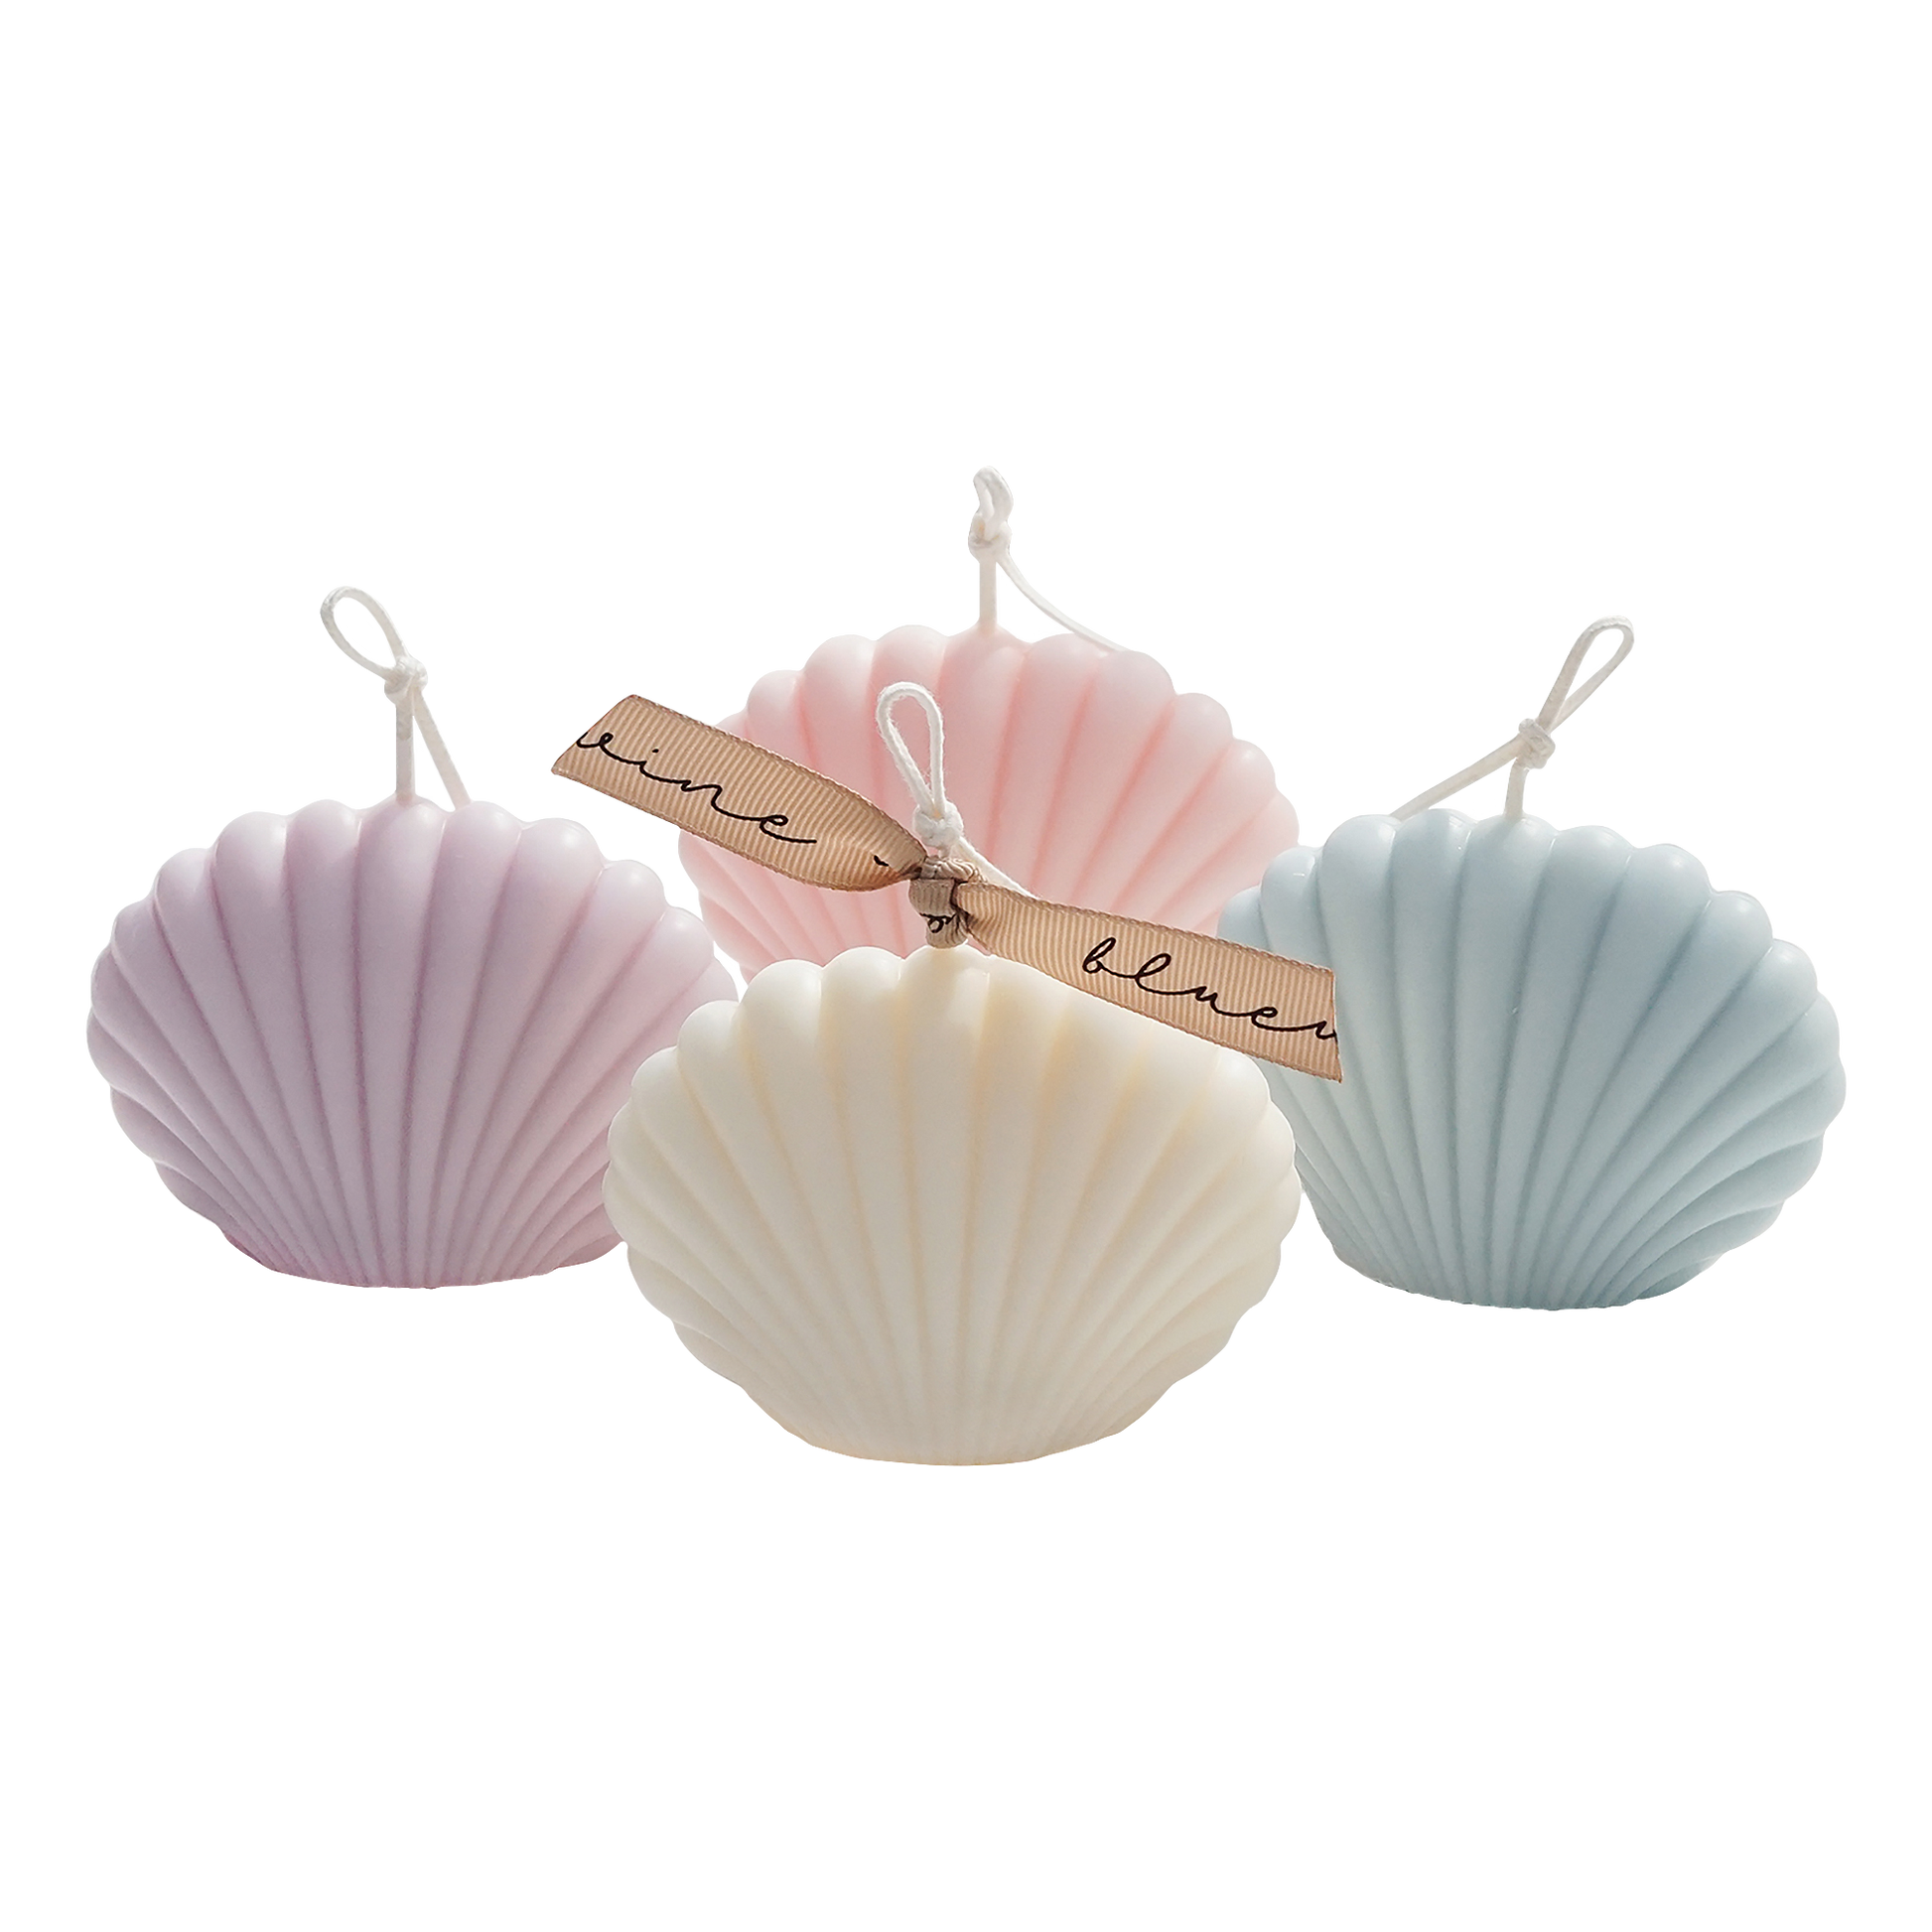 white, pink, lavender, and aqua blue seashell shape soy pillar candles